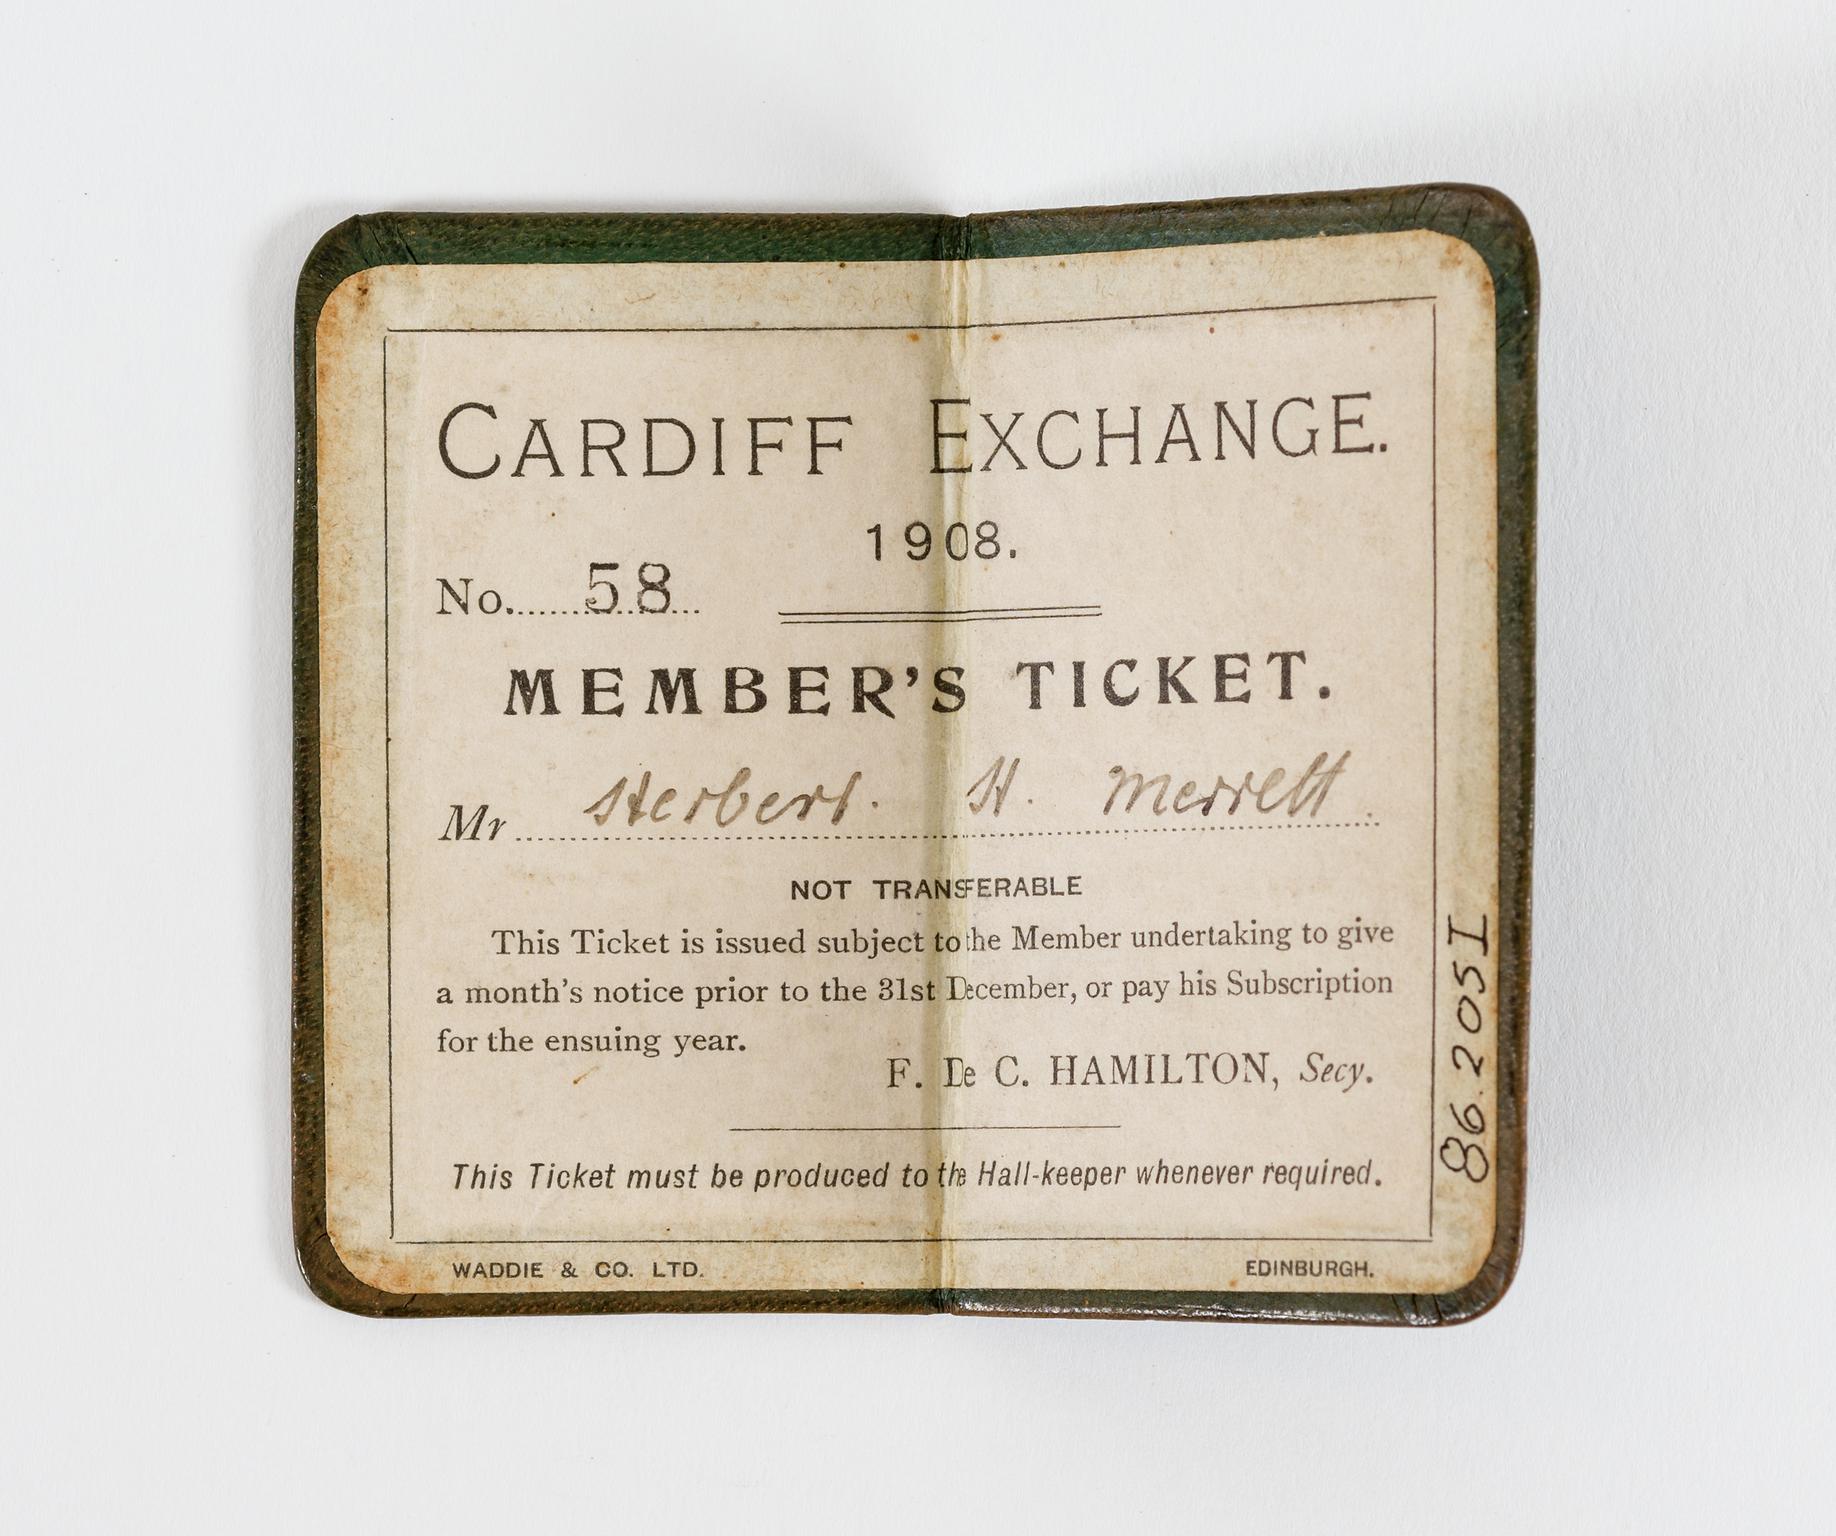 Cardiff Exchange, membership ticket